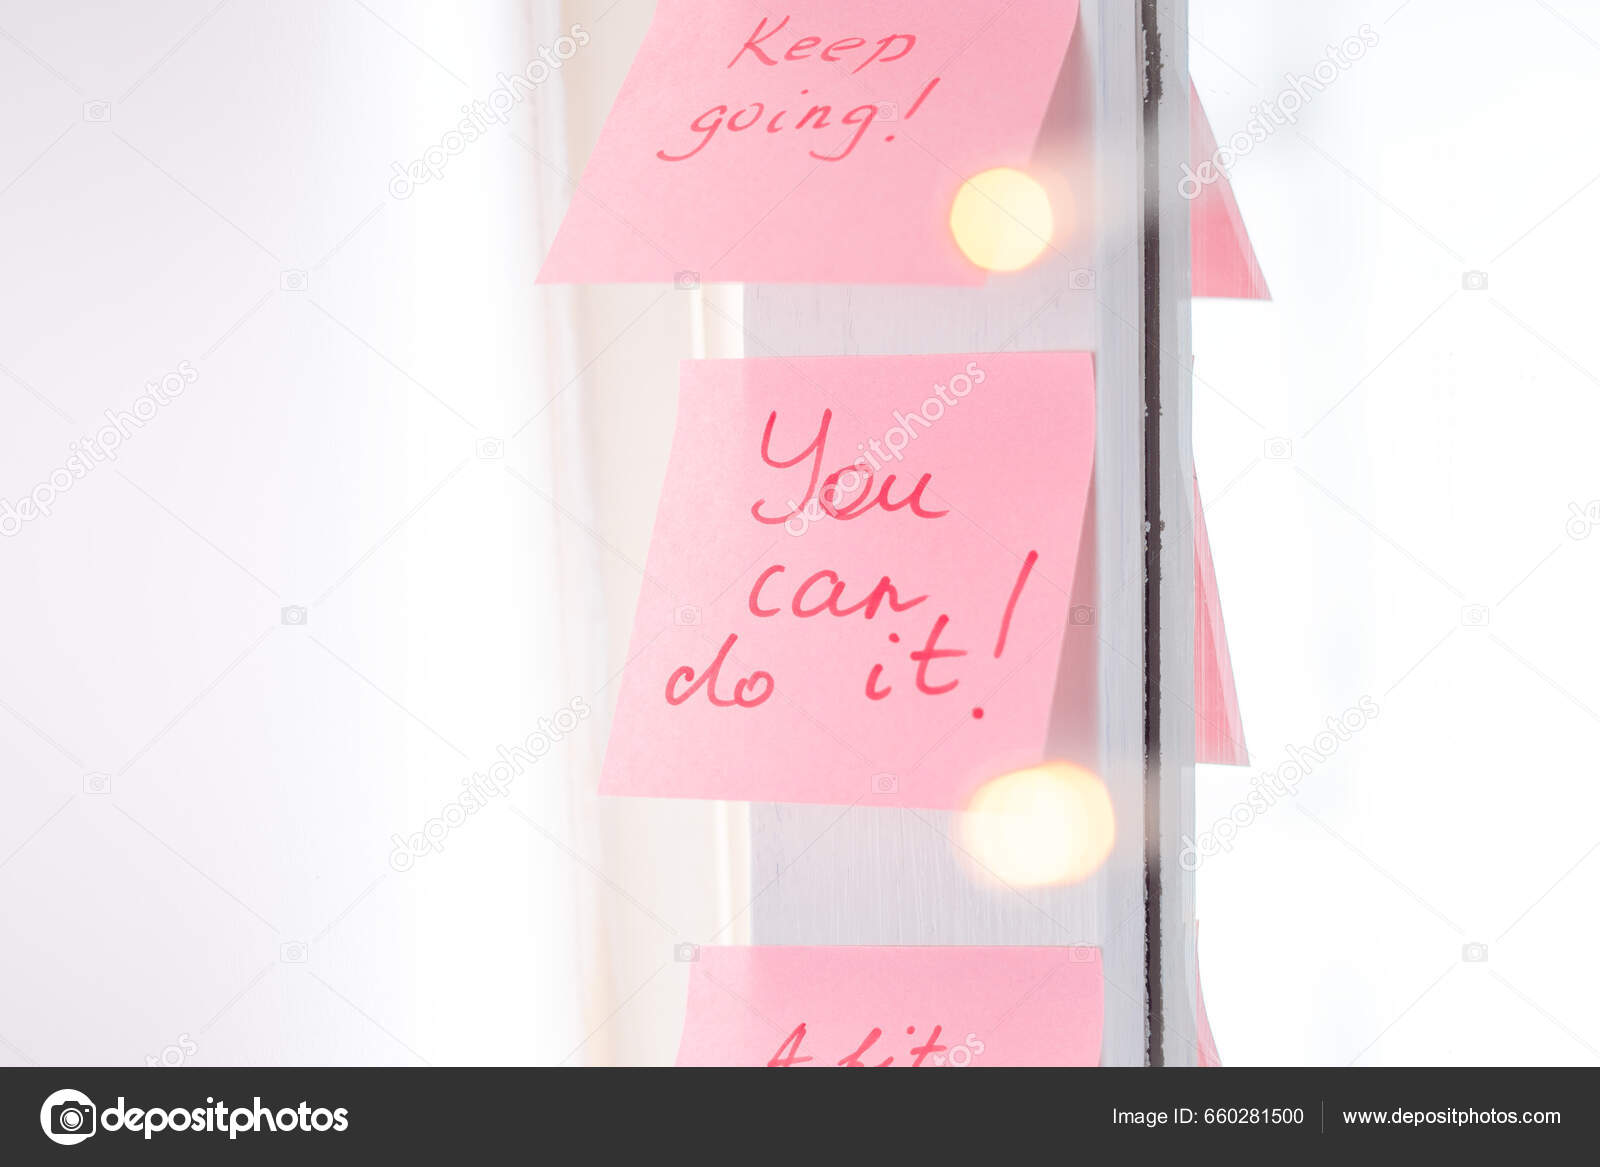 https://st5.depositphotos.com/34562364/66028/i/1600/depositphotos_660281500-stock-photo-inspirational-quotes-pink-sticker-mirror.jpg